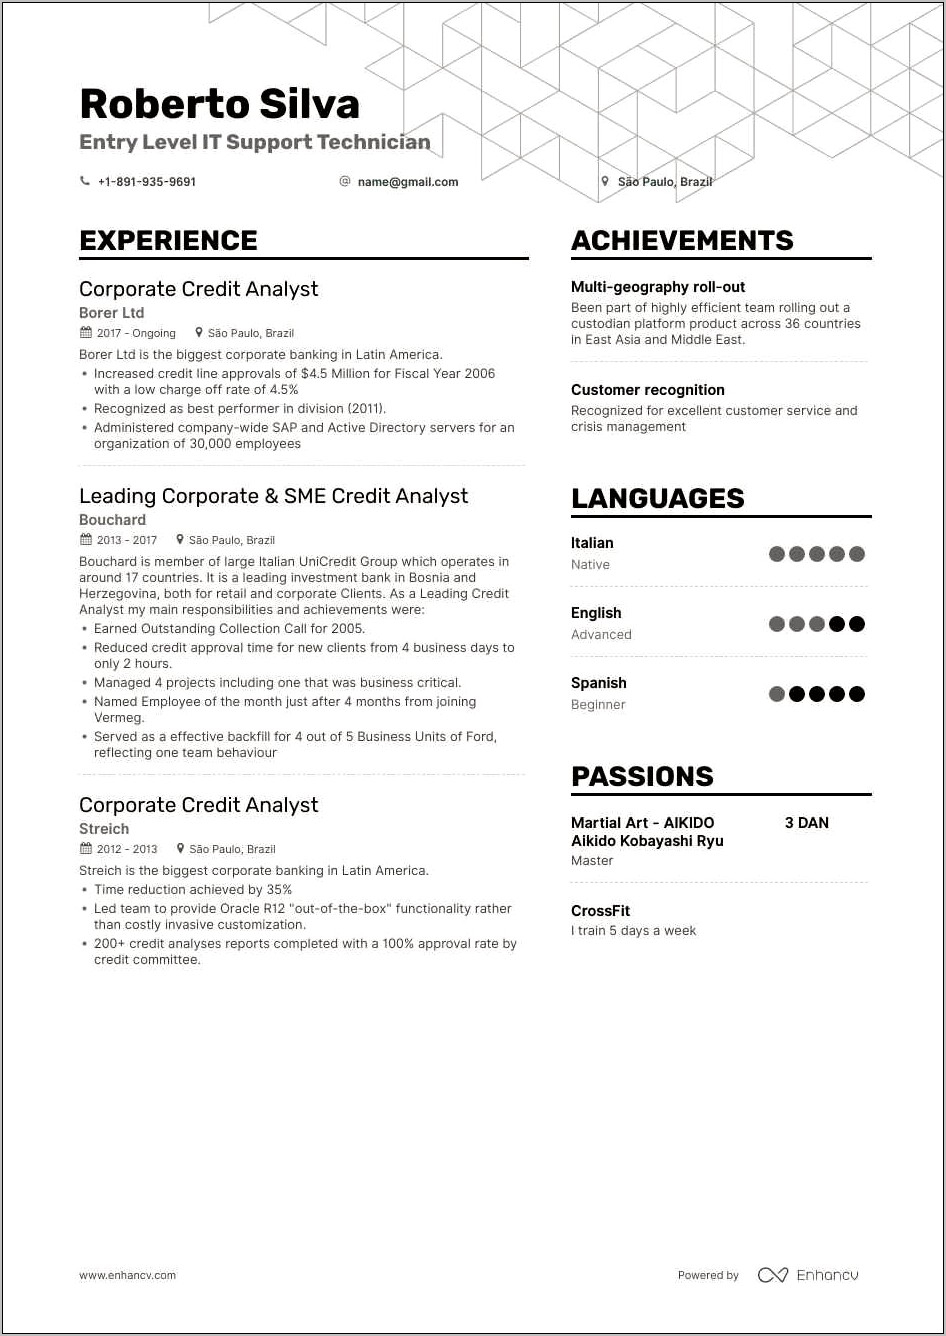 Customer Service Resume Accomplishment Statements Examples